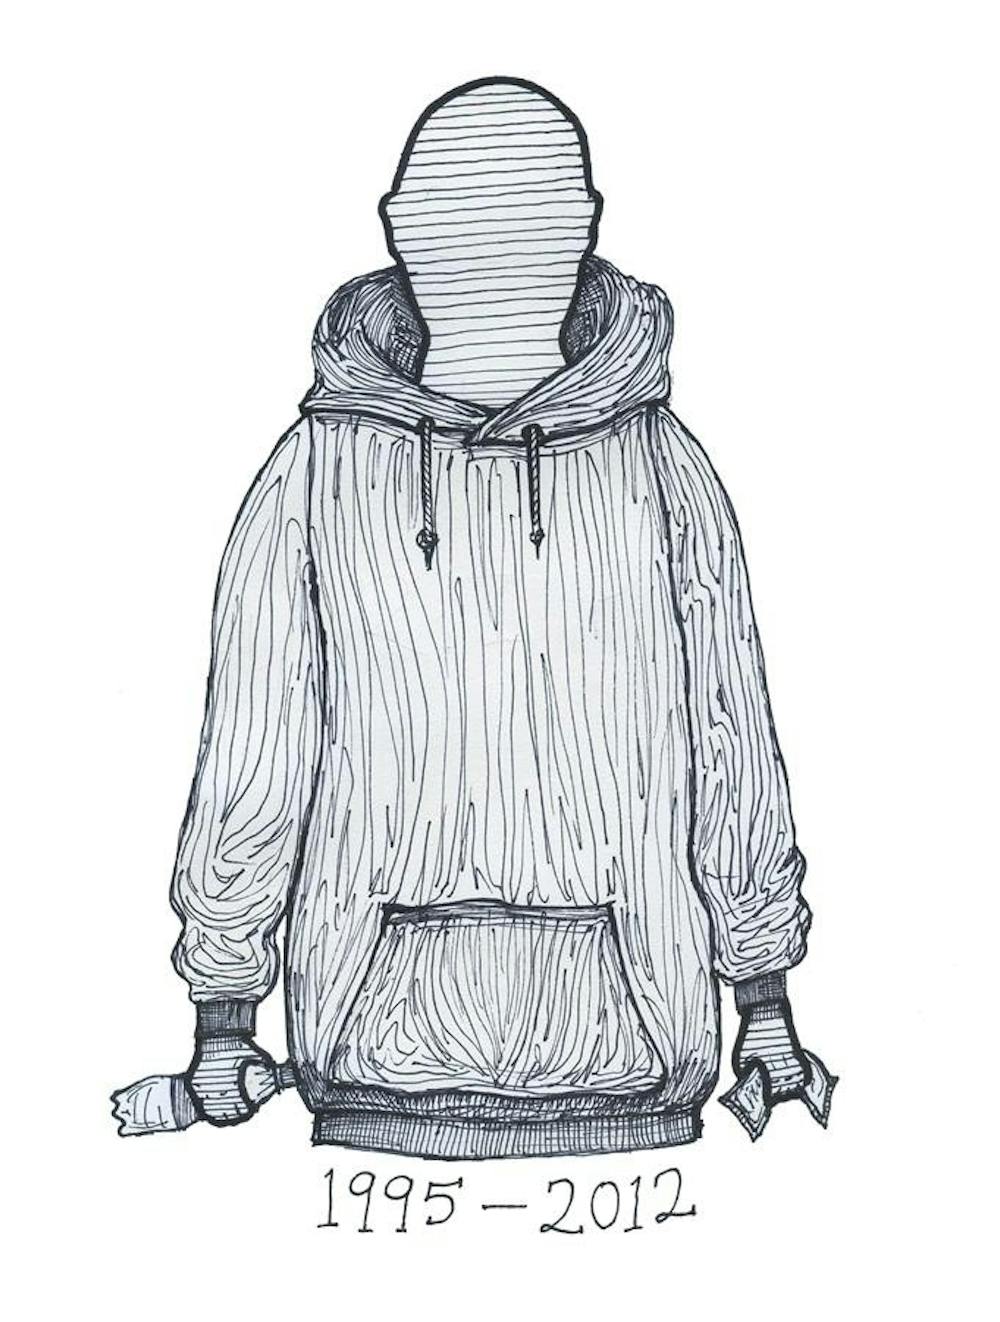 Trayvon Martin: 1995-2012